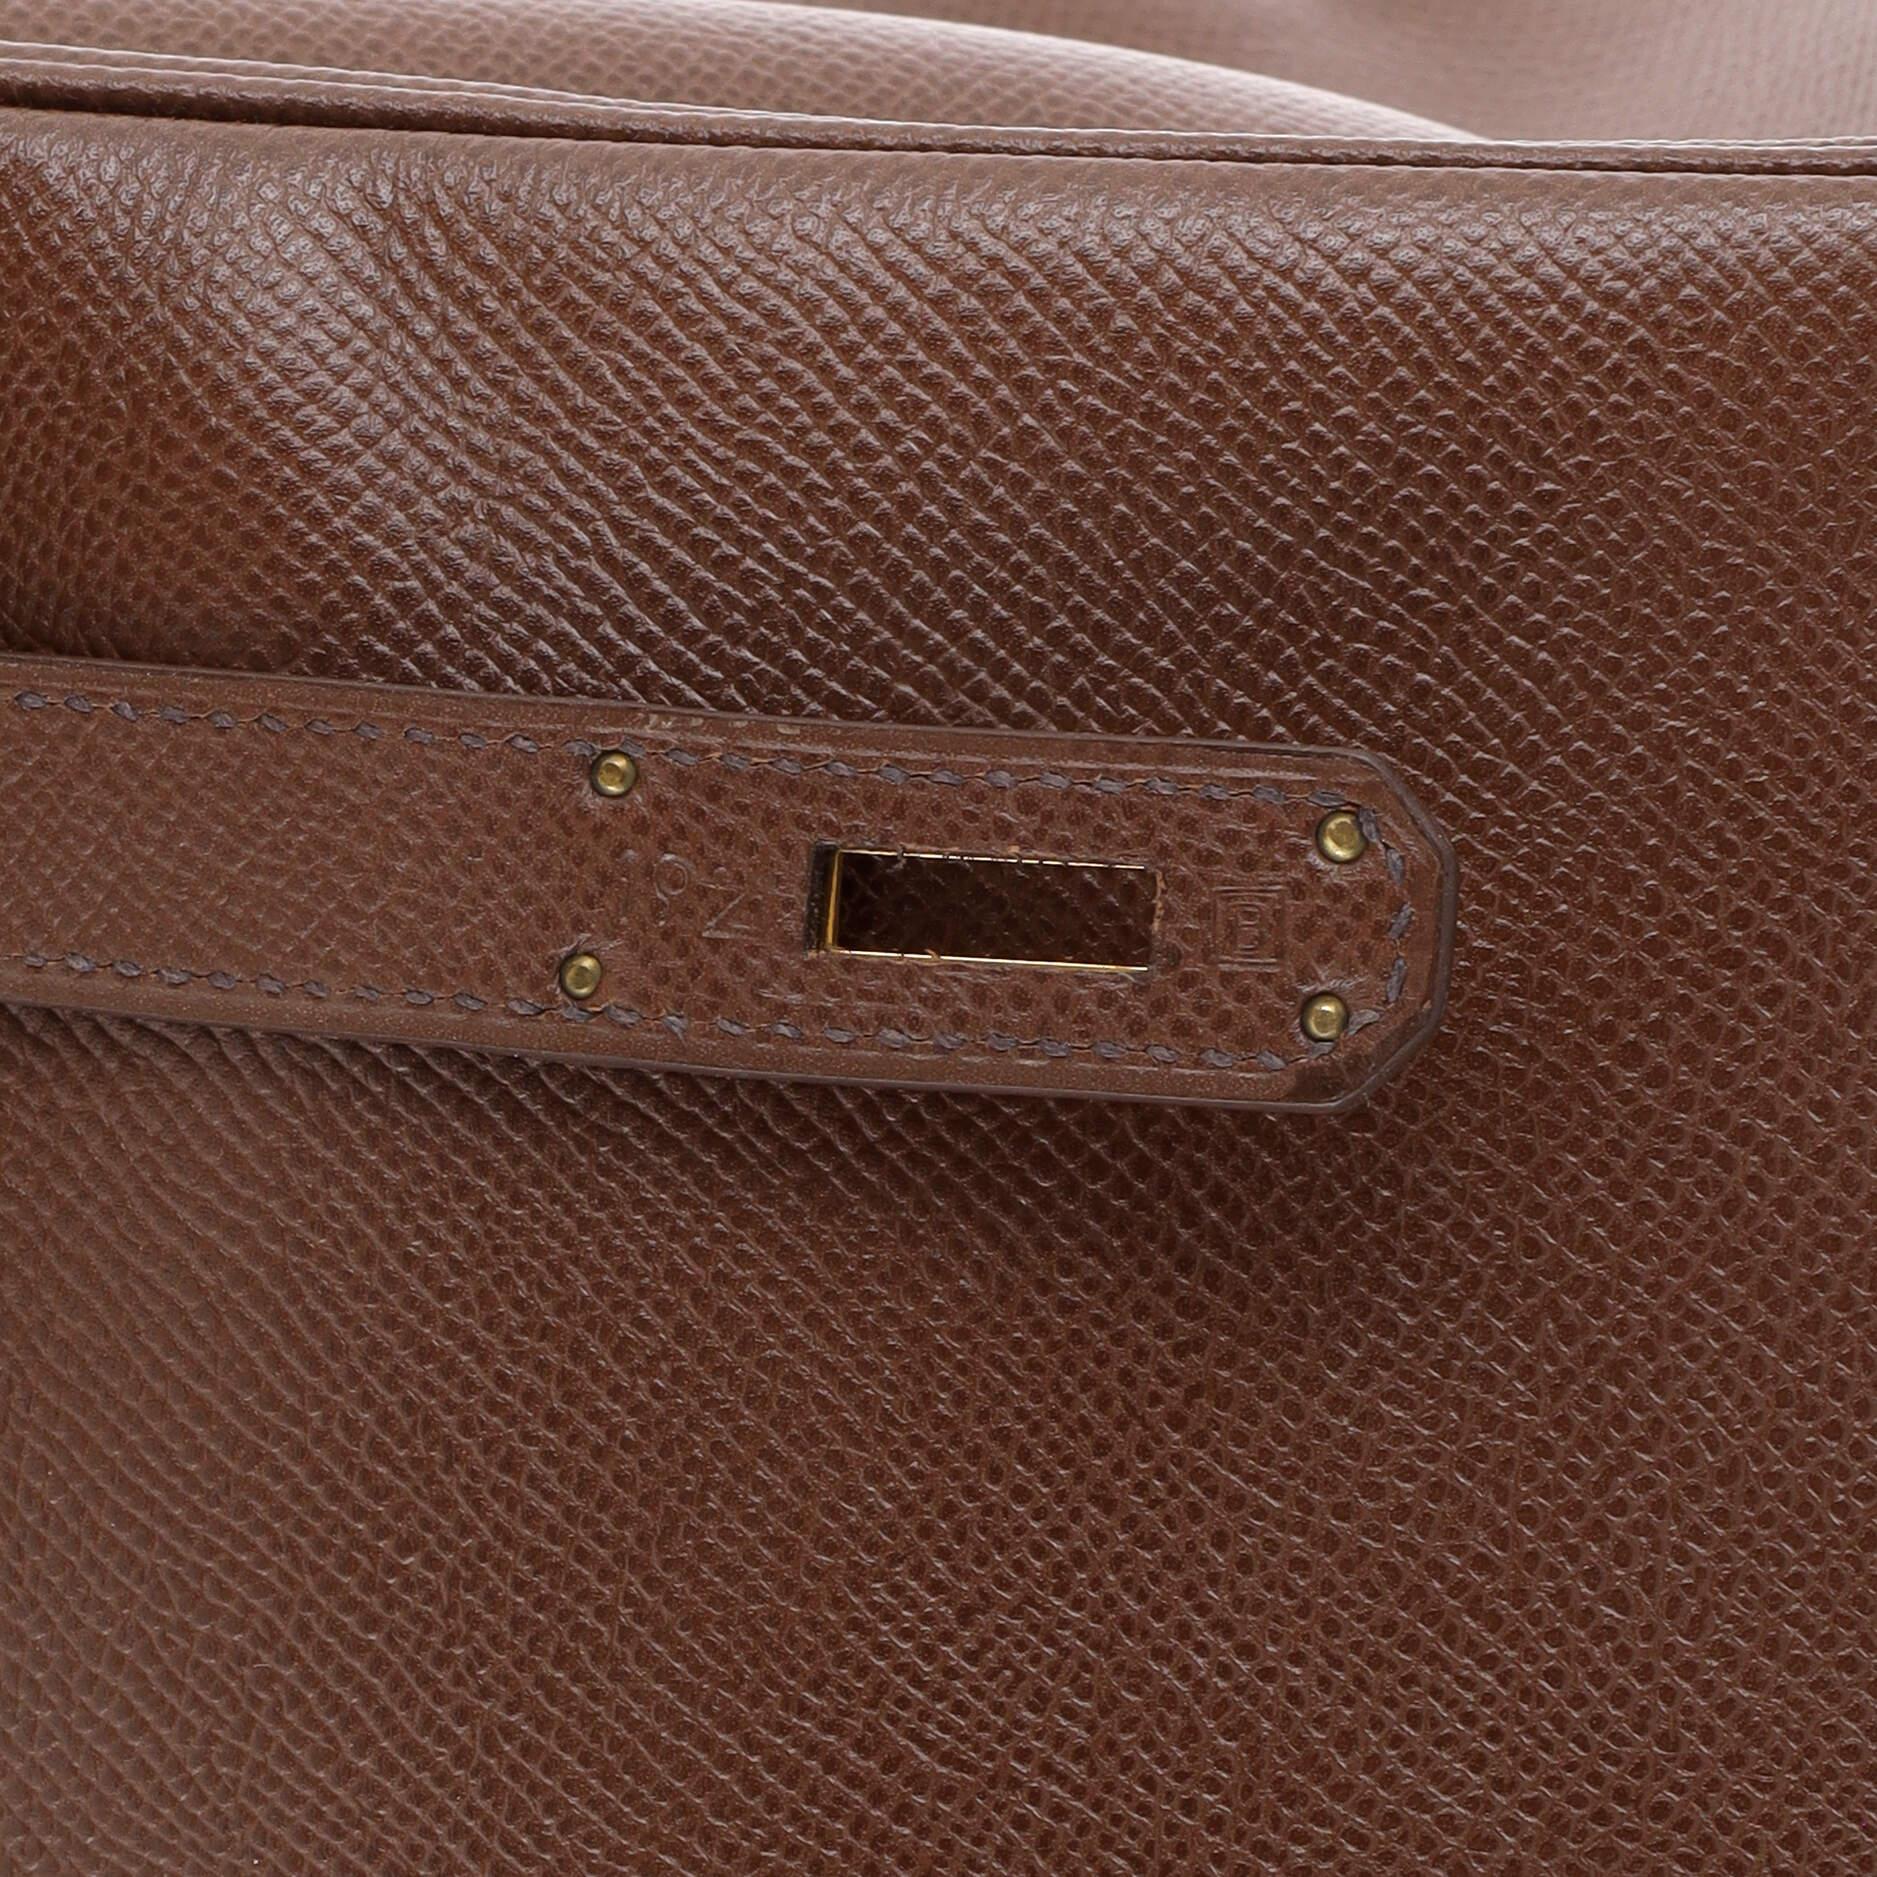 Hermes Birkin Handbag Marron Foncé Courchevel with Gold Hardware 35 5